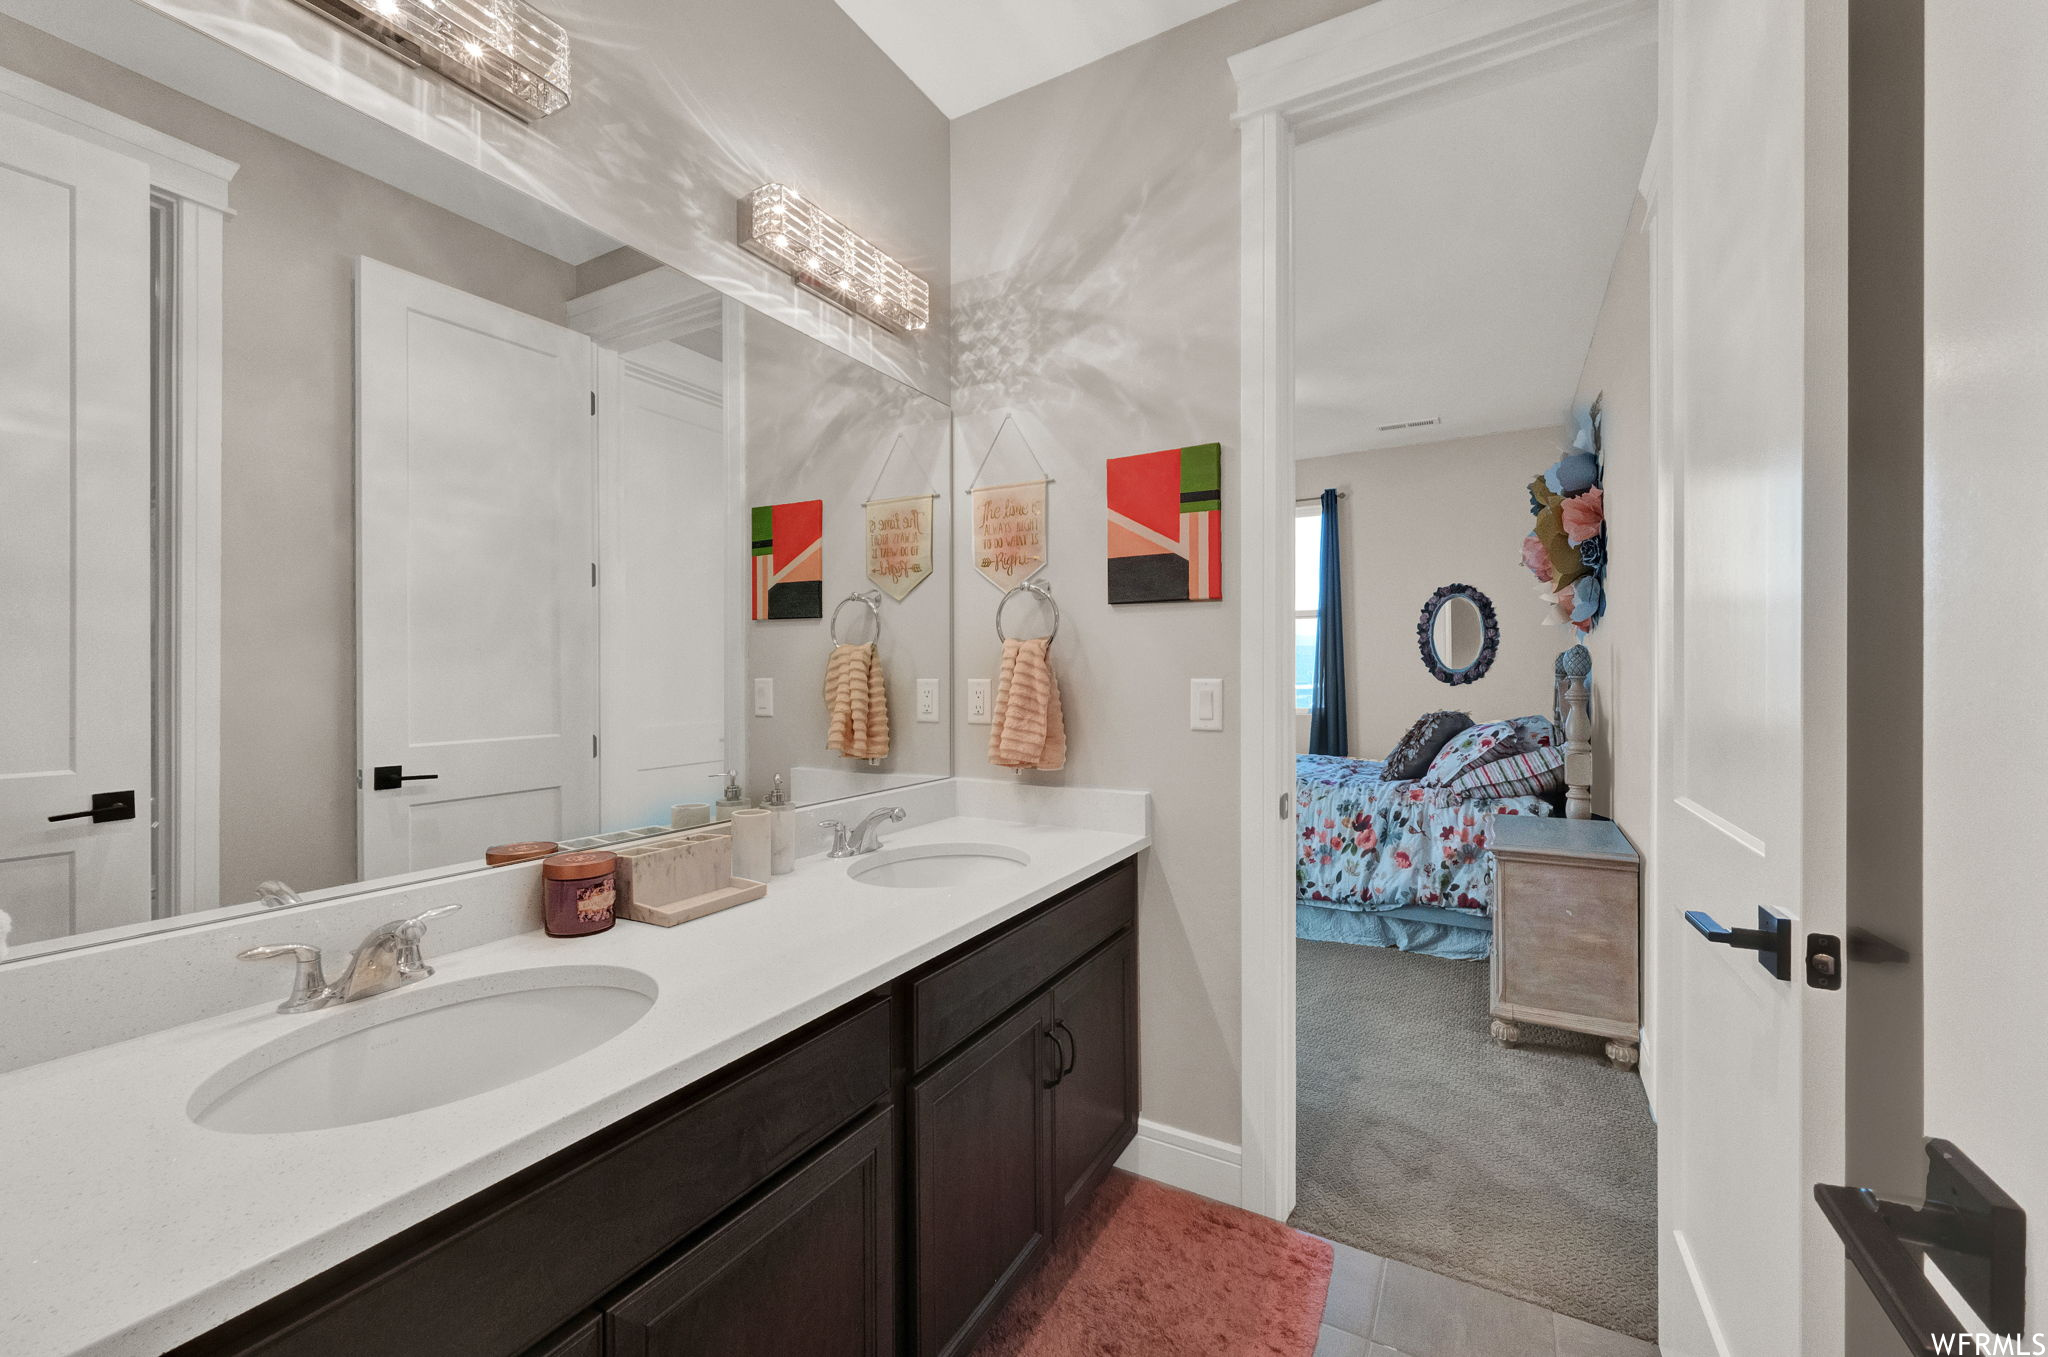 Bathroom with double sink vanity, light tile floors, and mirror